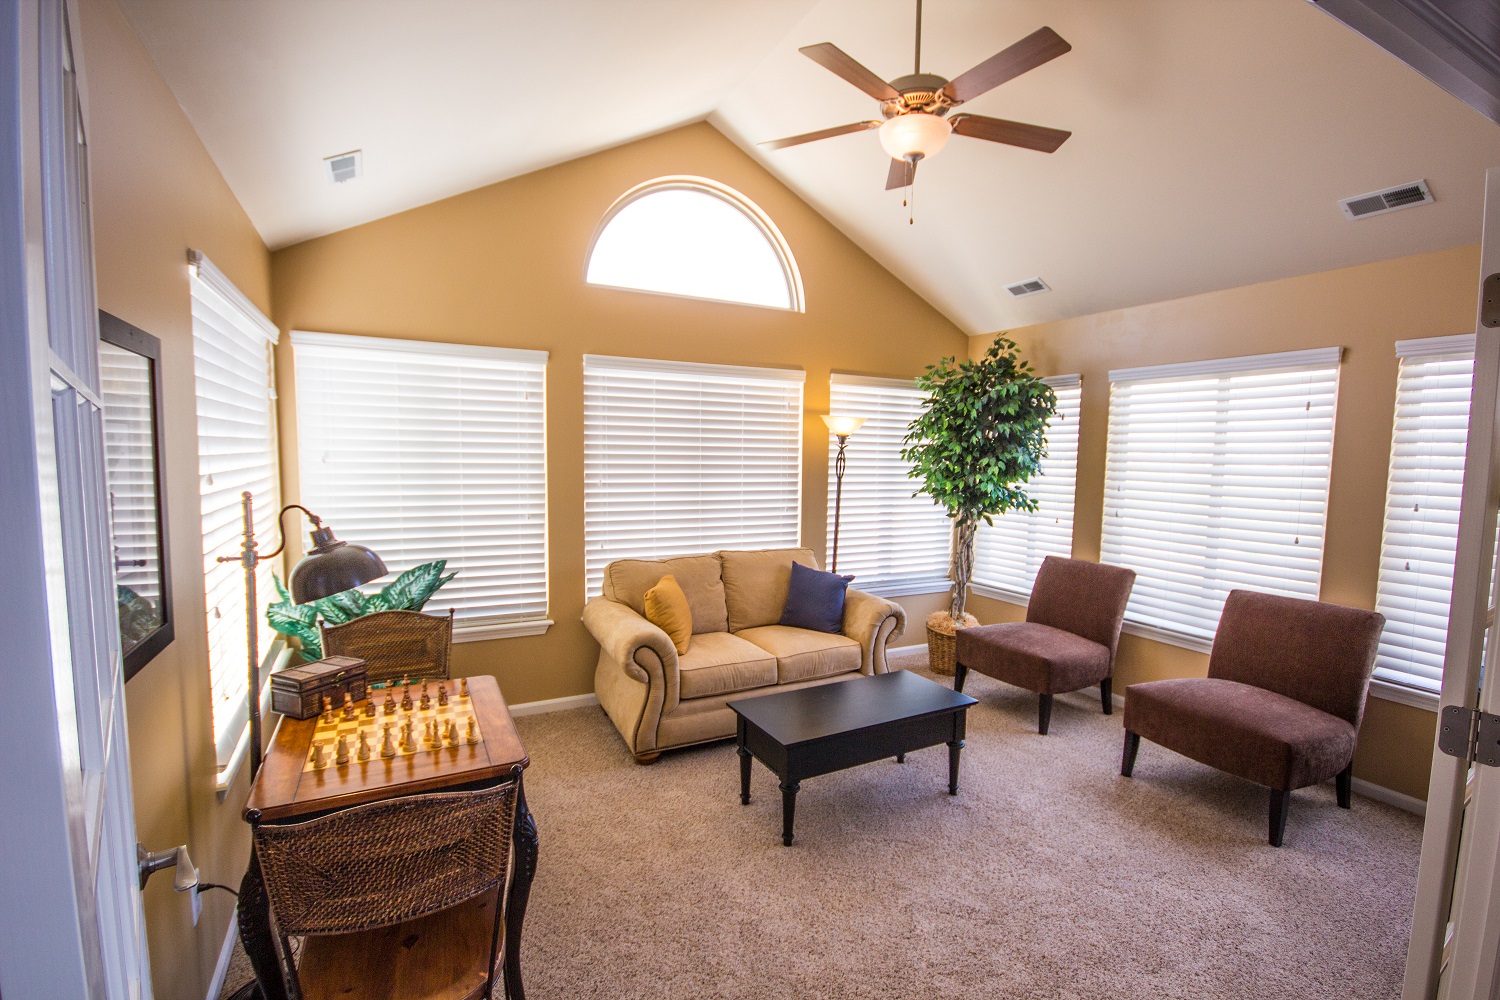 Homebuyers can enjoy a seasonal veranda with their new spacious ranch home.